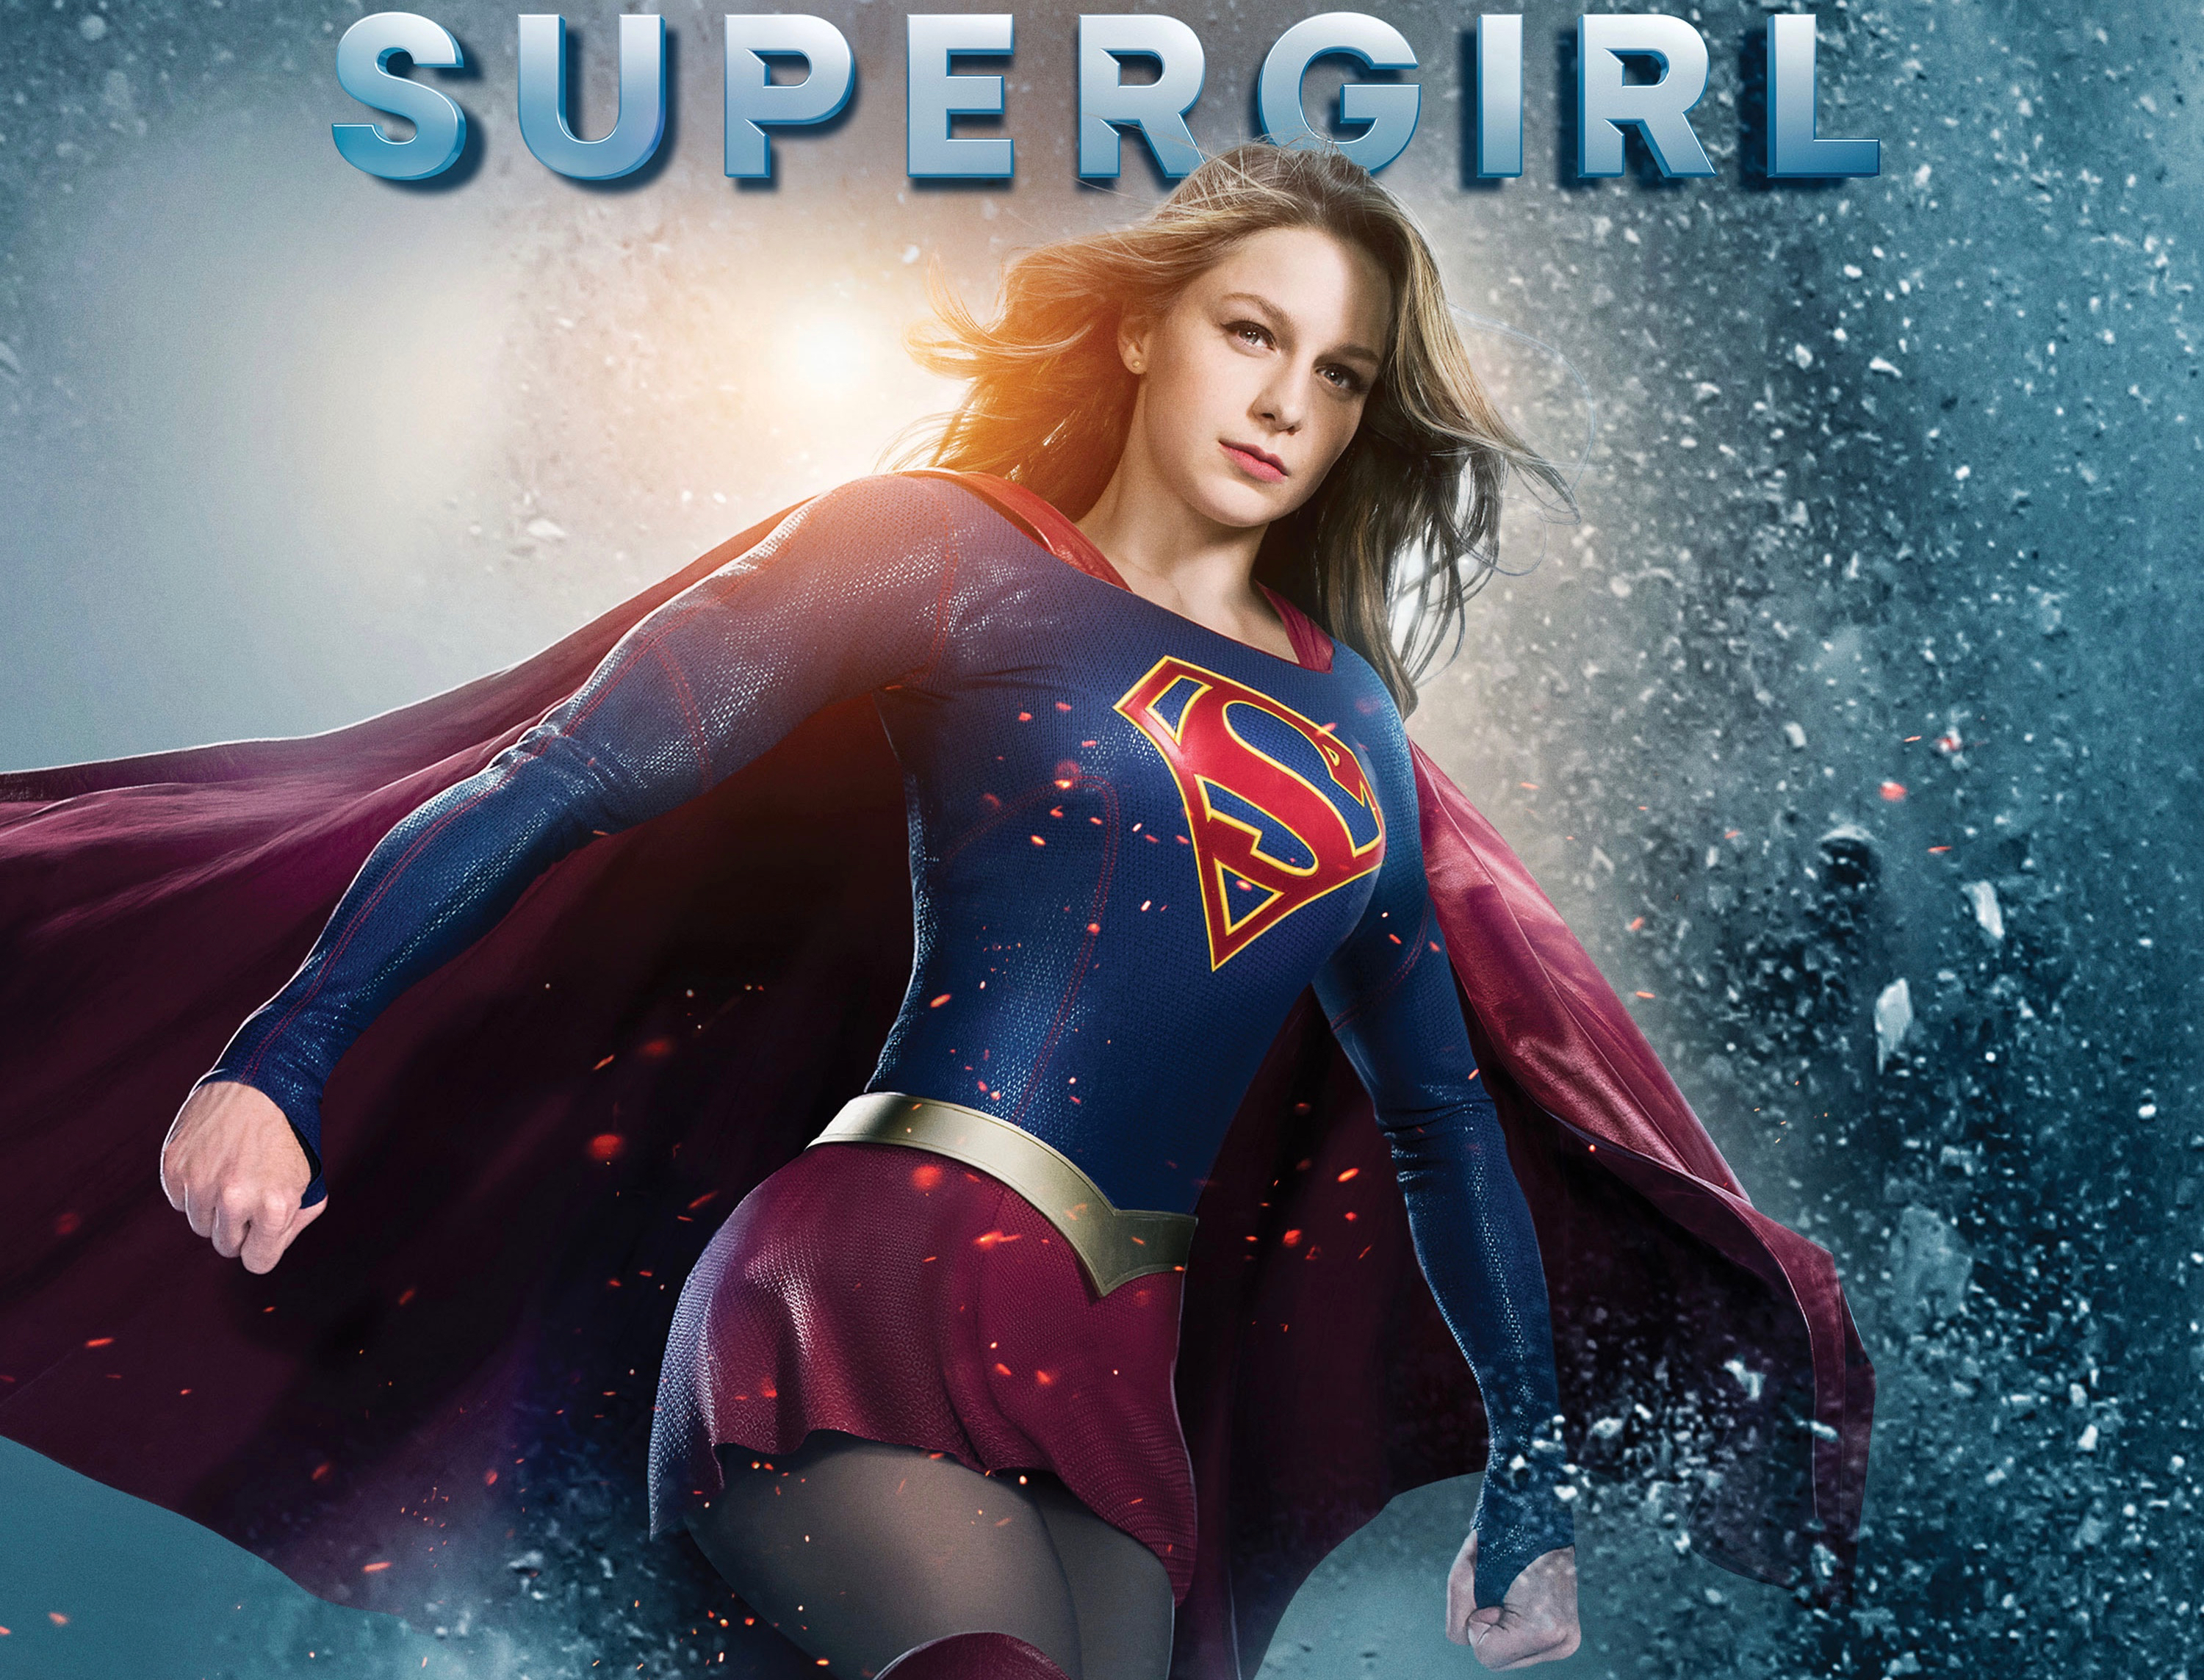 Baixar papel de parede para celular de Programa De Tv, Super Homen, Supergirl, Melissa Benoist, Kara Danvers gratuito.